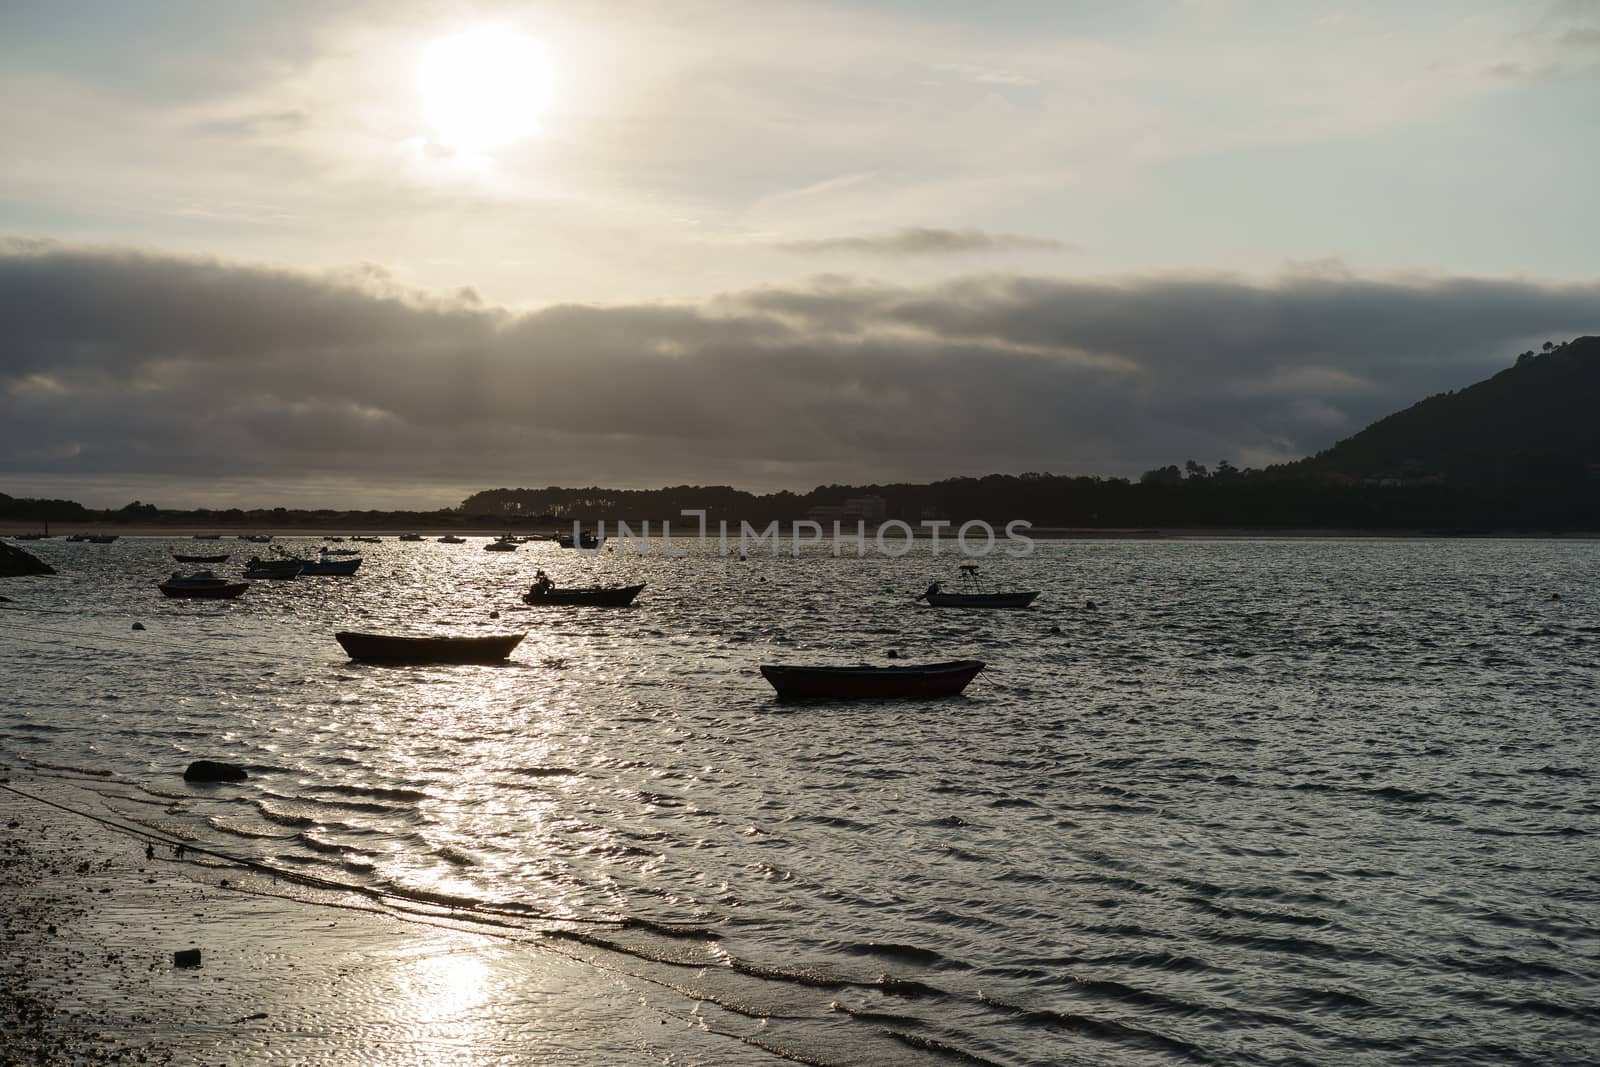 The boats at the sunset by yury_kara